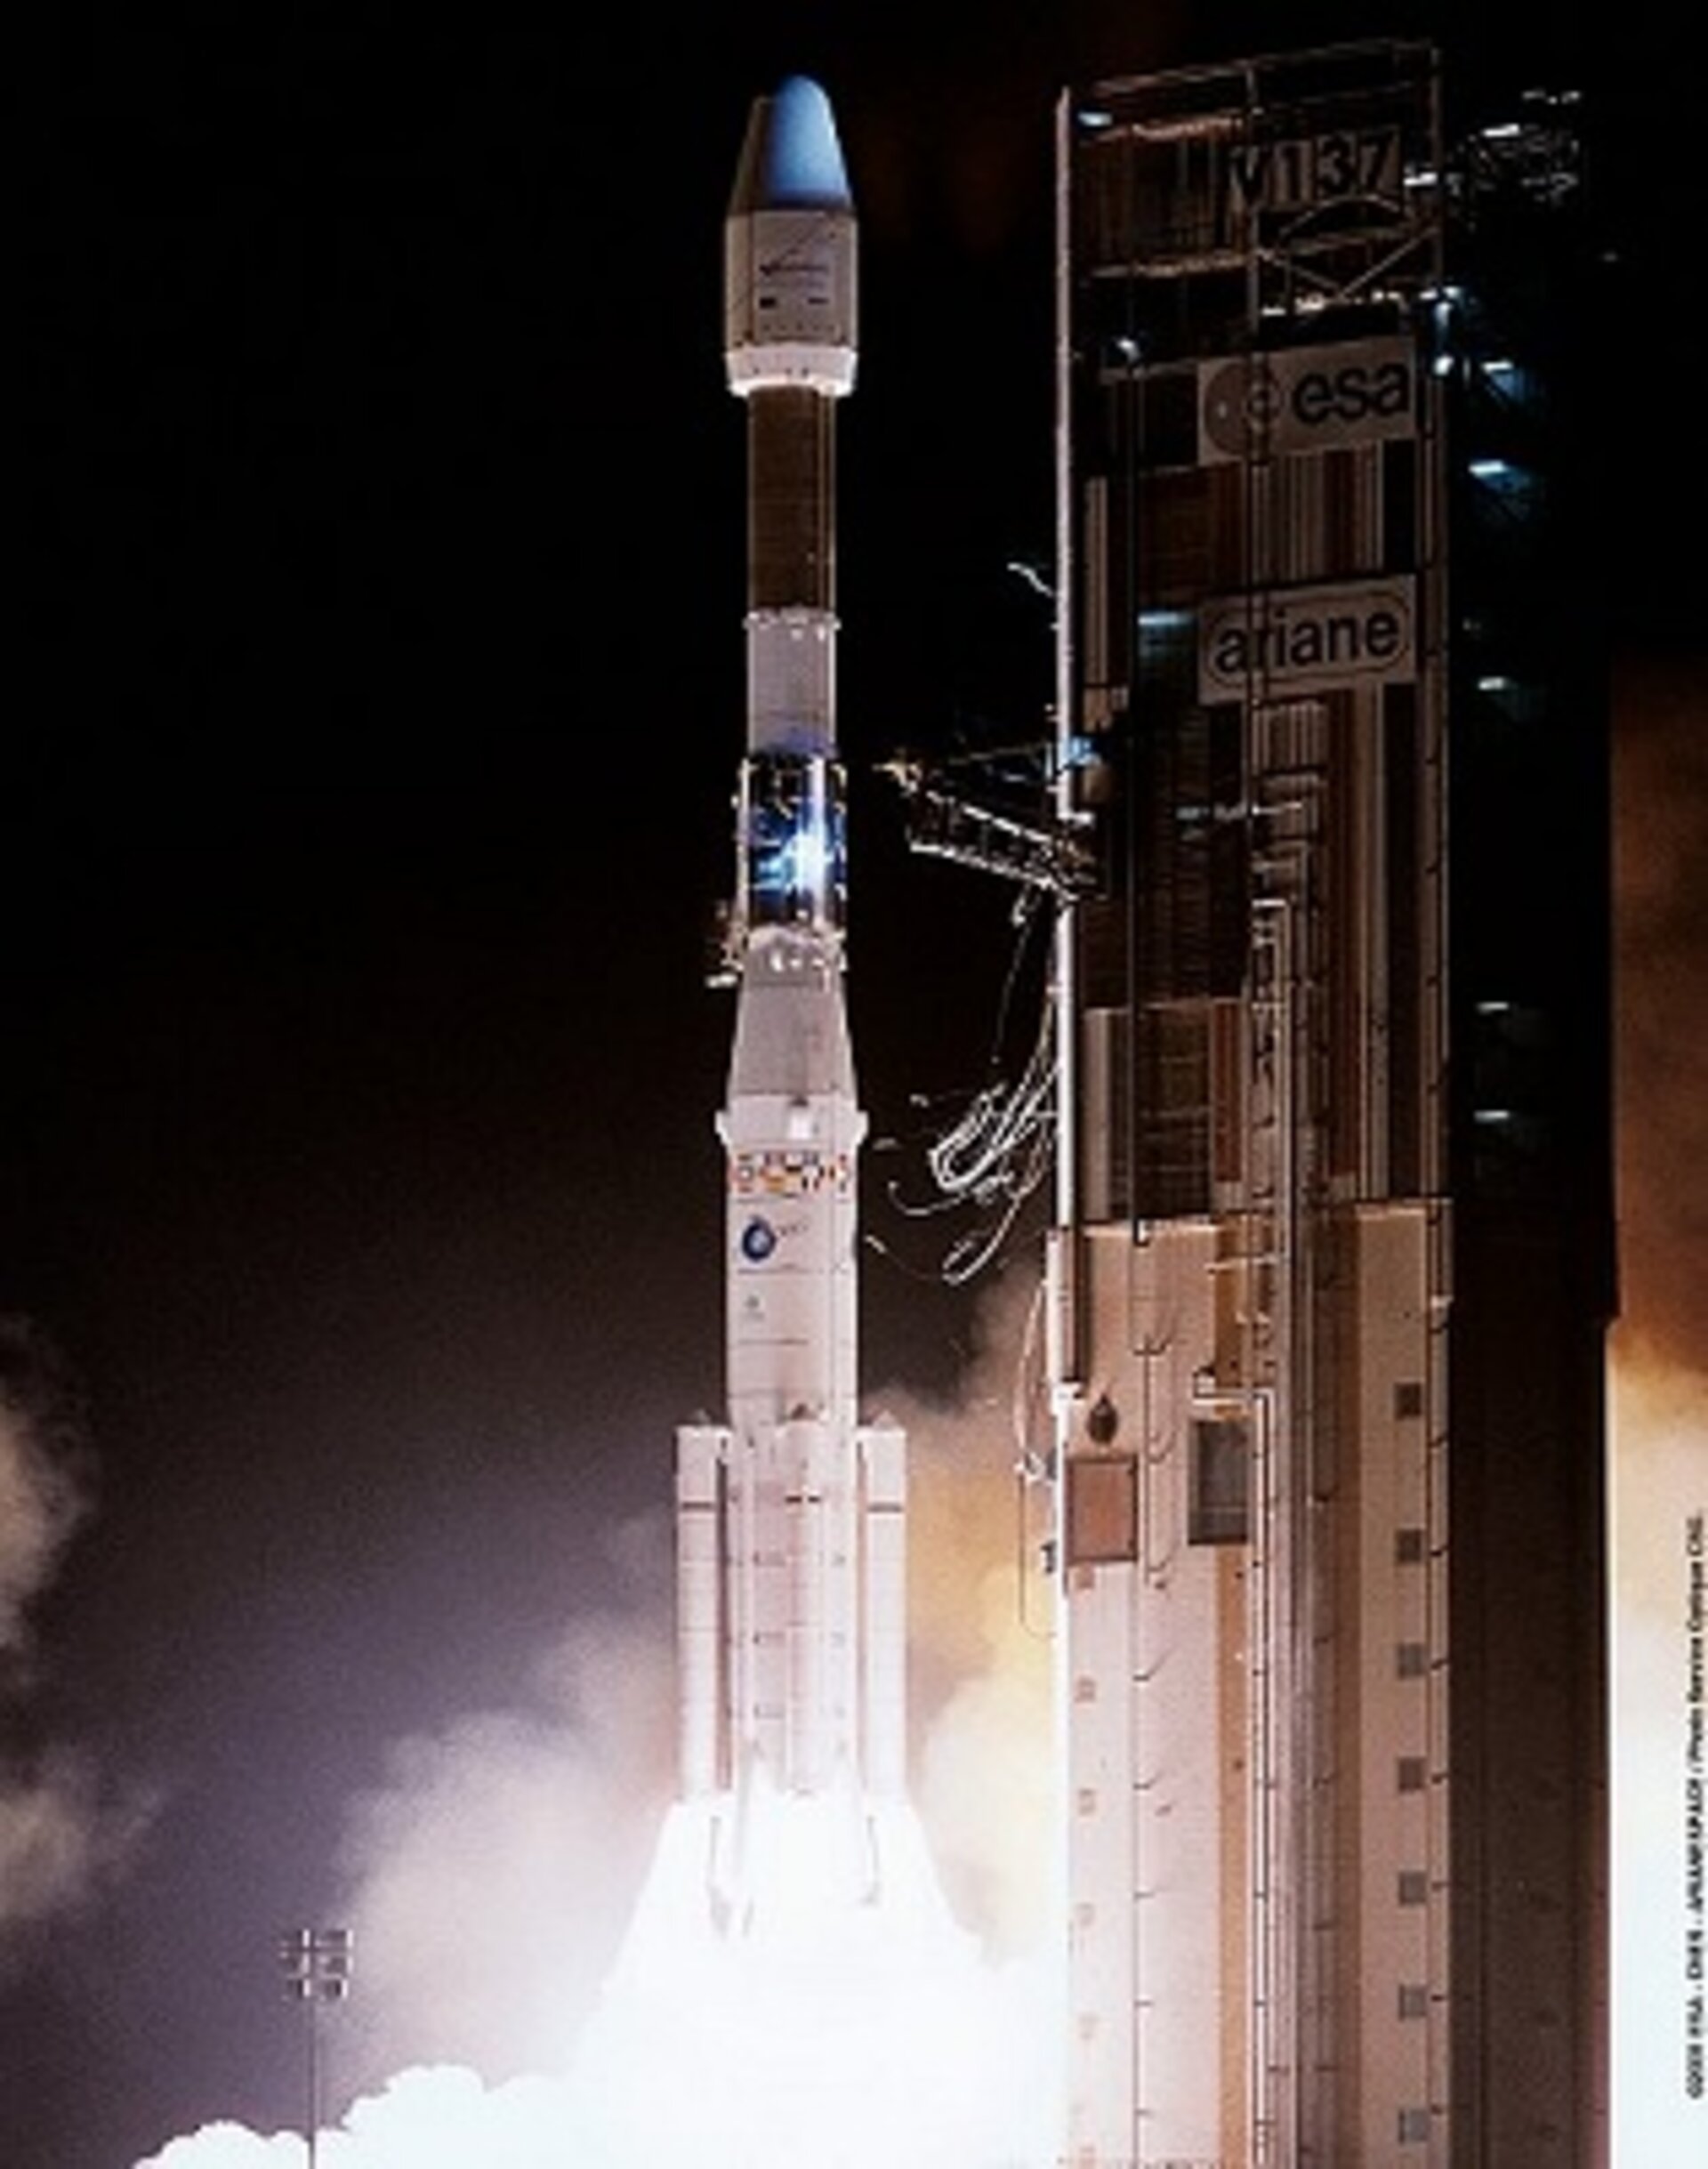 Ariane 44P carrying the Eurasiasat 1 spacecraft